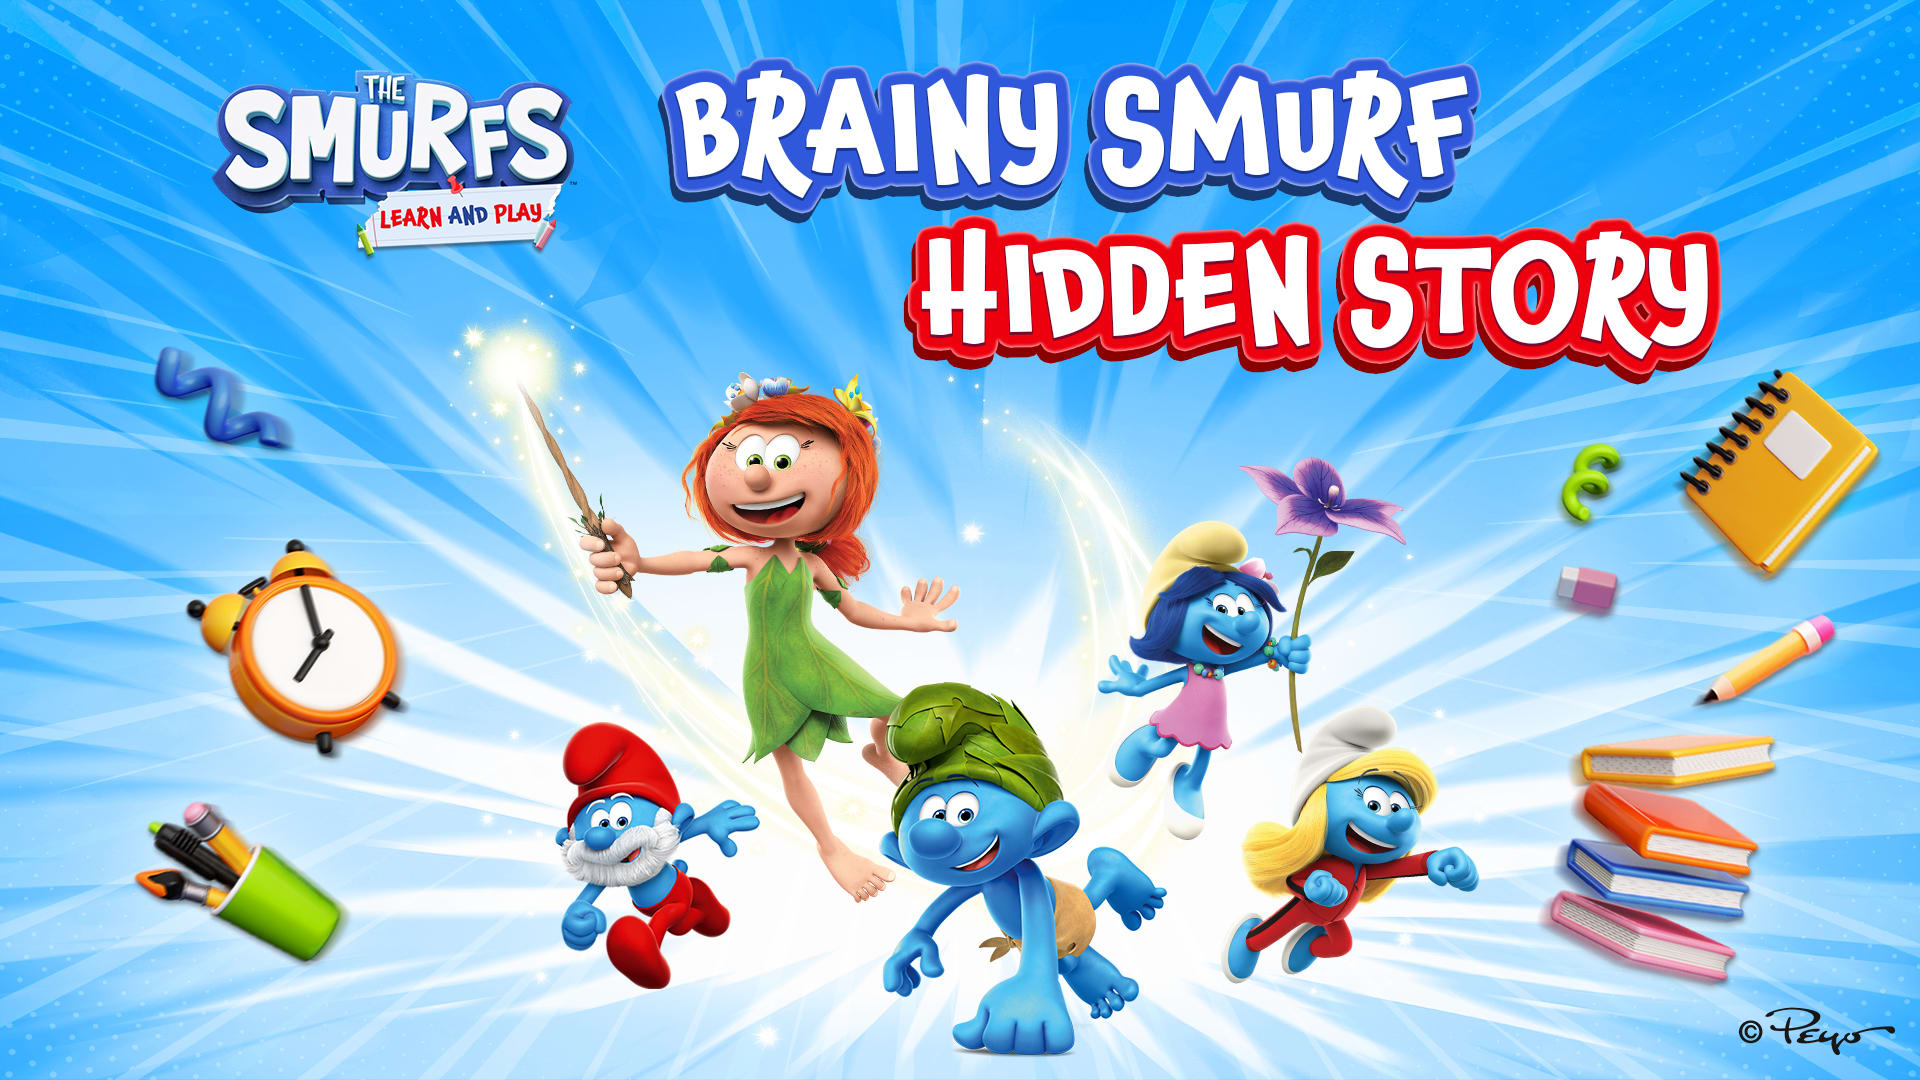 Brainy Smurf Hidden Story 1